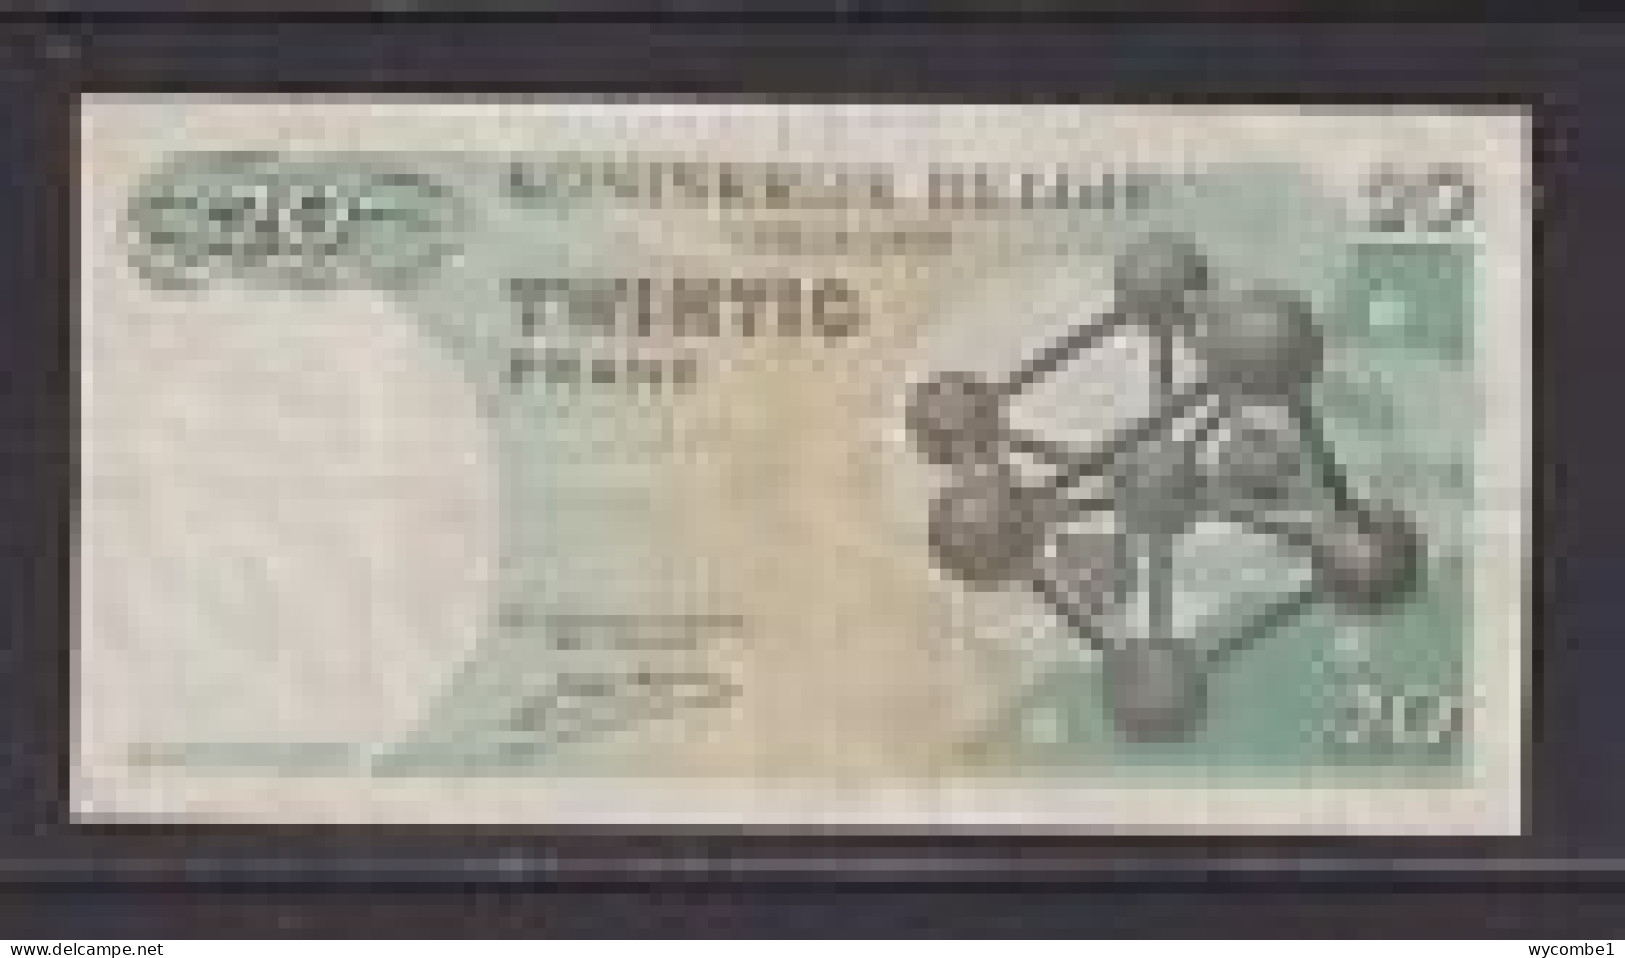 BELGIUM - 1964 20 Franc Circulated Banknote - 20 Francs